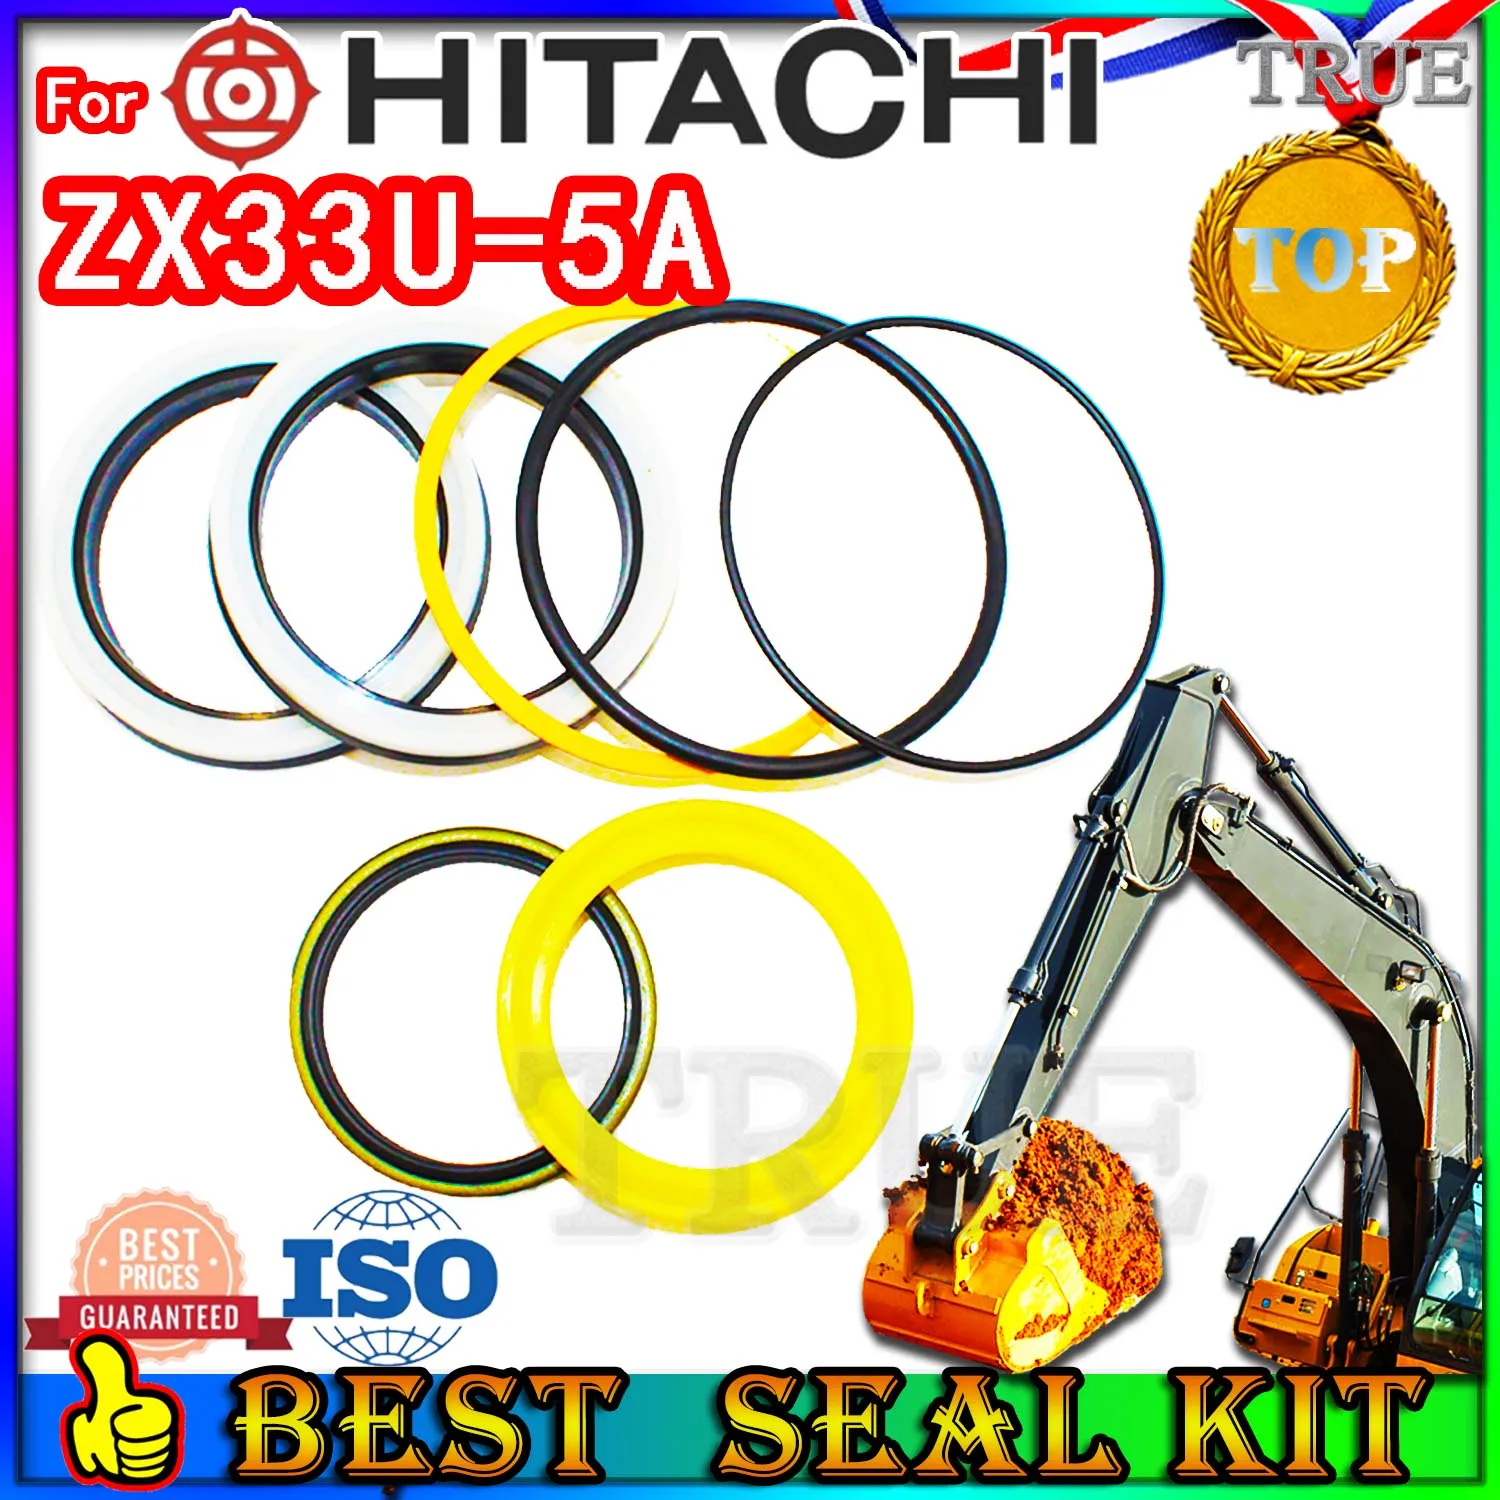 

For Hitachi ZX33U-5A Oil Seal Repair Kit Boom Arm Bucket Excavator Hydraulic Cylinder Hit ZX33U 5A Machinery Maintenance Rebuild